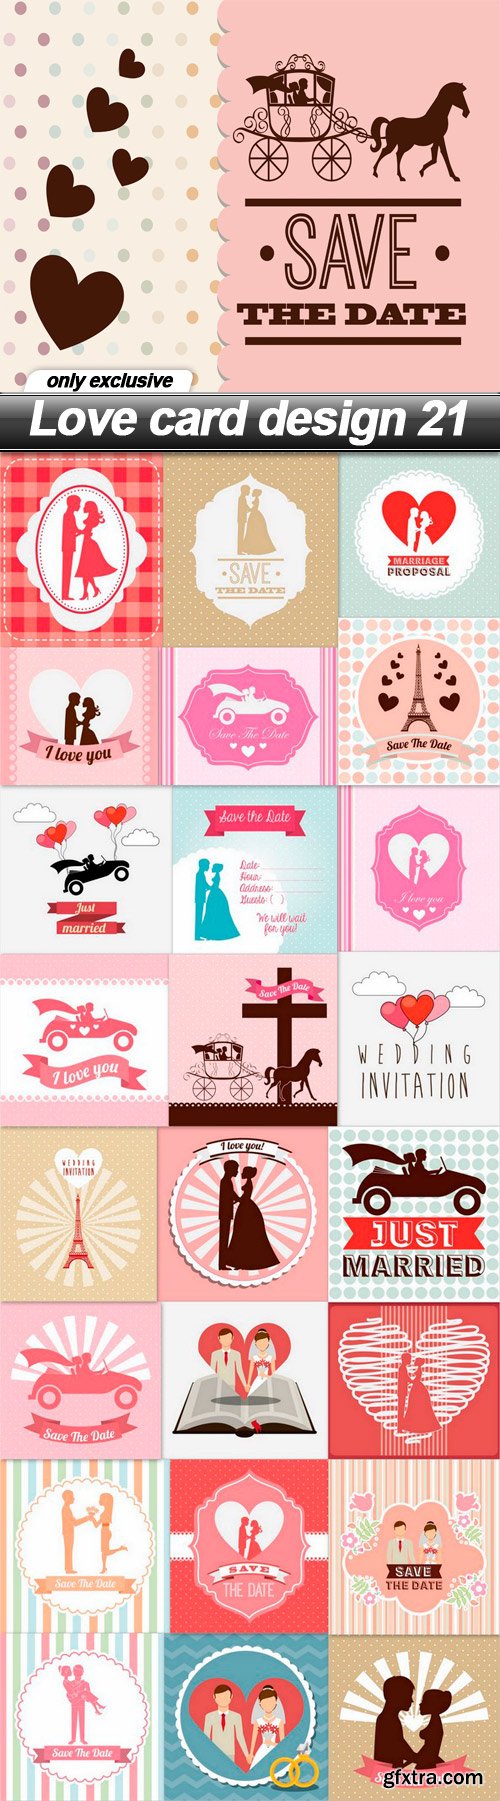 Love card design 21 - 25 EPS